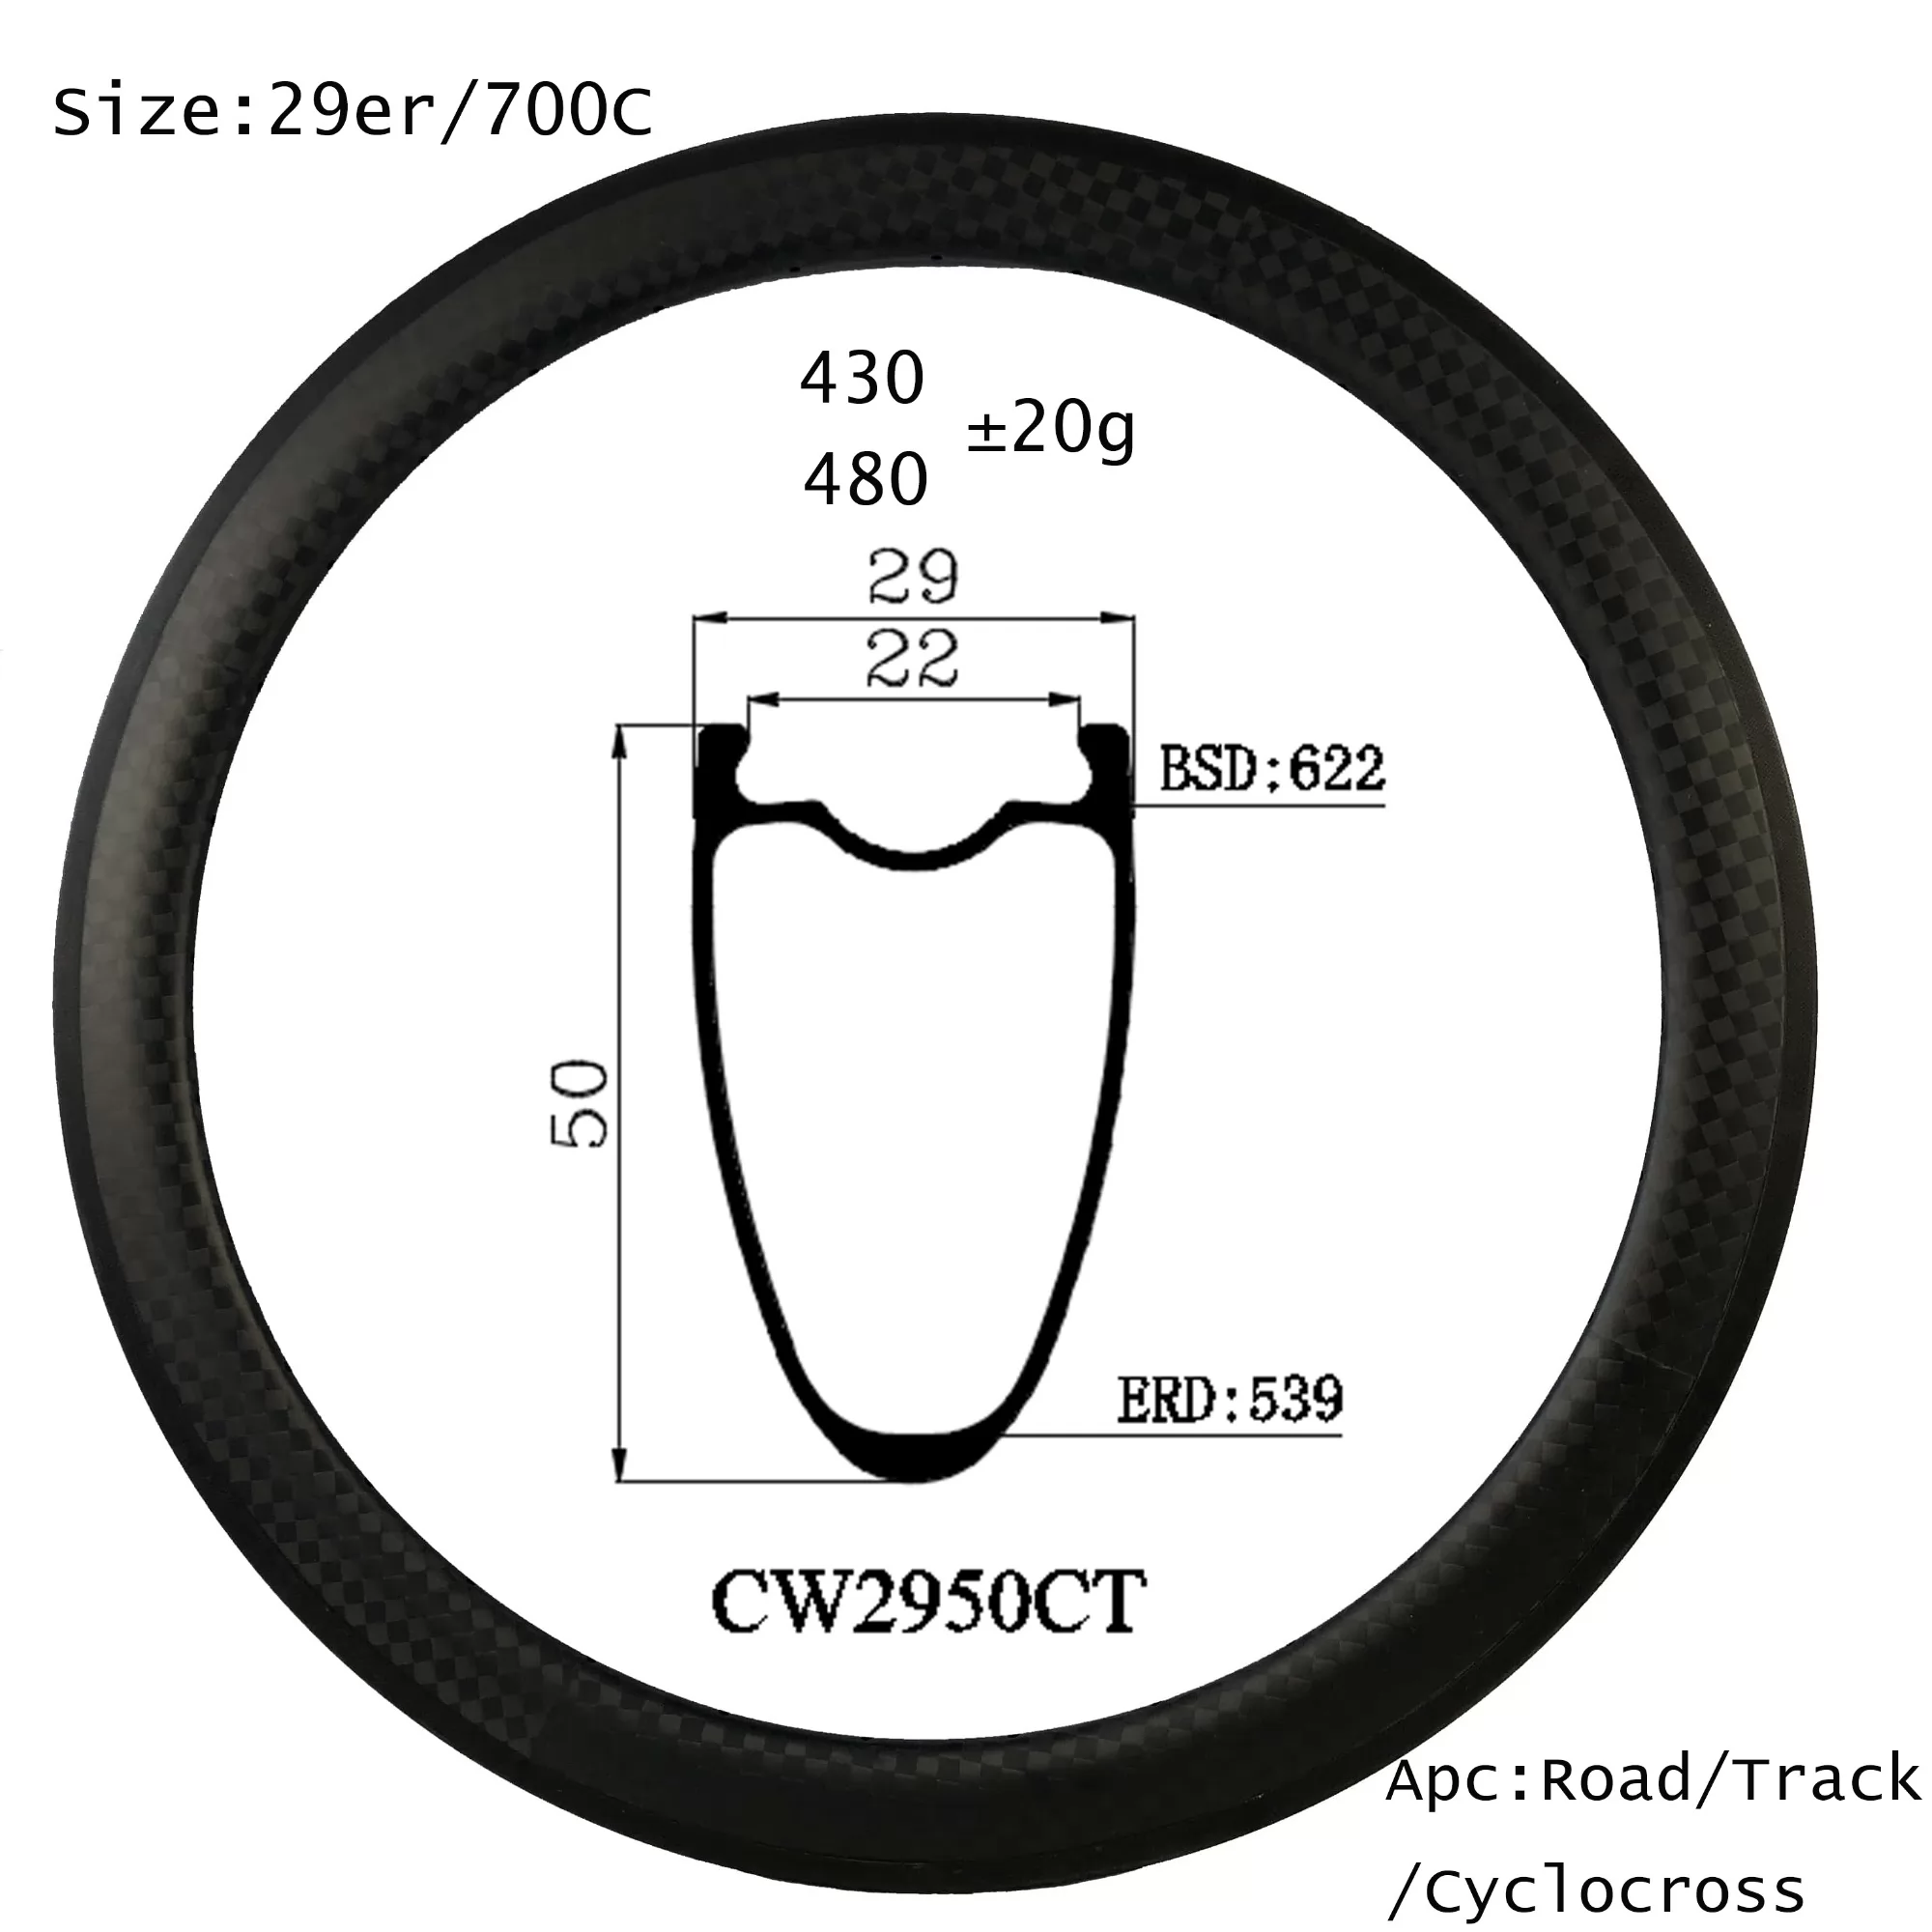 |CW2950CT| New arrivel gravel bike rims 50mm depth 29mm wide carbon wheel clincher tubeless tyres Gemany rider fan like